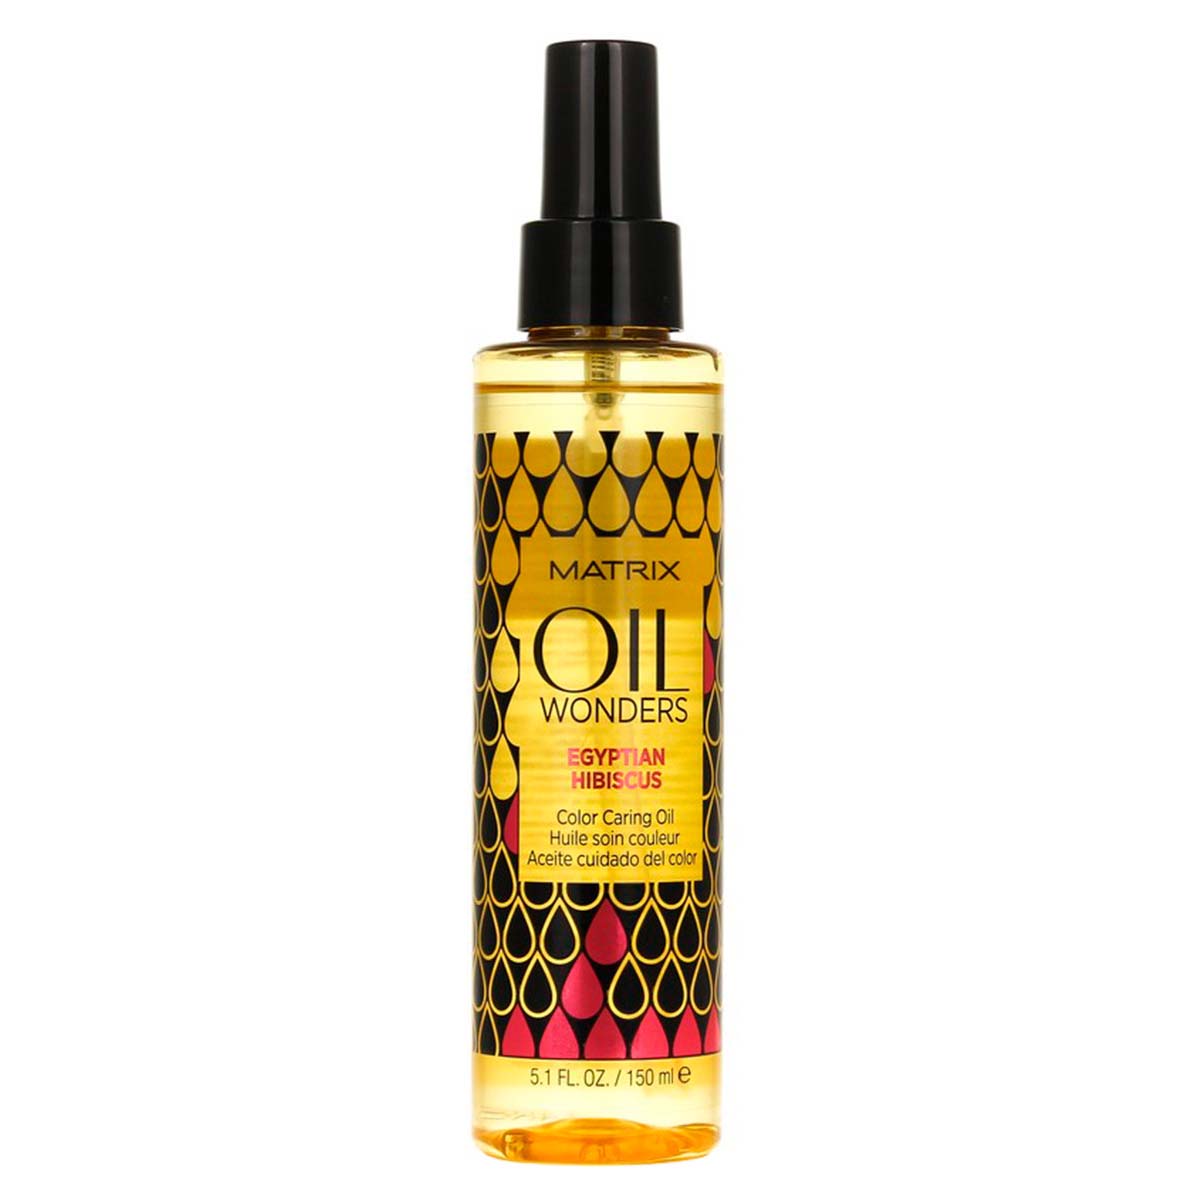 morrocan oil deluxe wonders Matrix Масло «Египетский Гибискус» для защиты цвета окрашенных волос, 150 мл (Matrix, Oil Wonders)